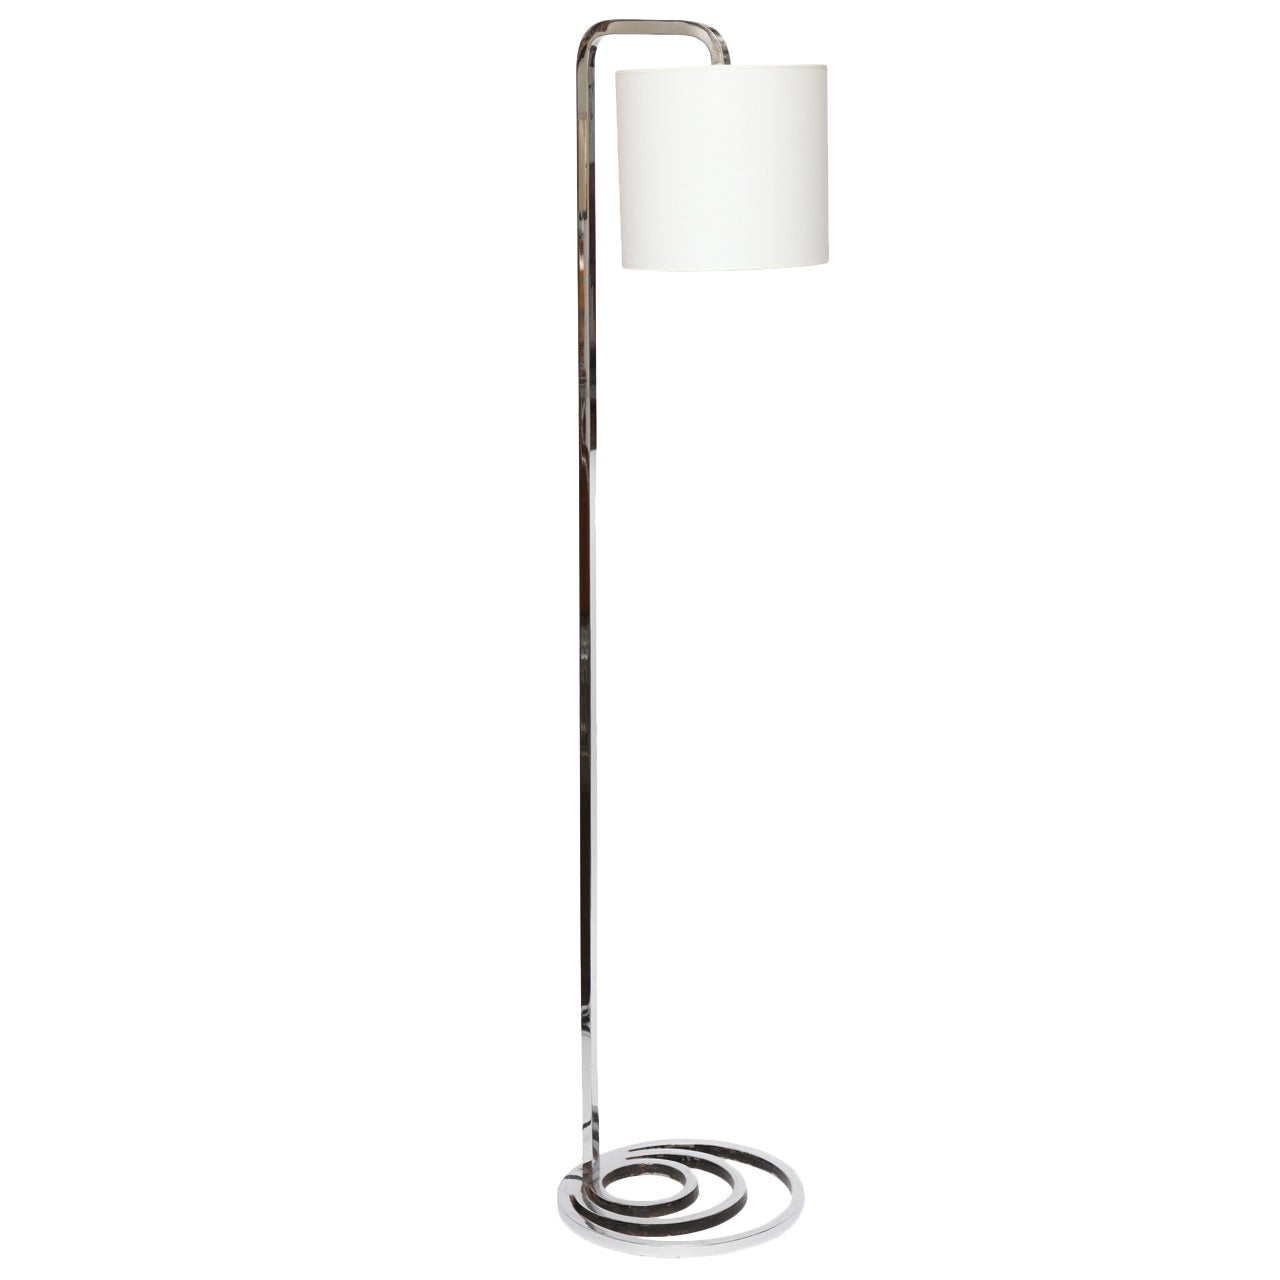 1930s American Modernist Floor Lamp